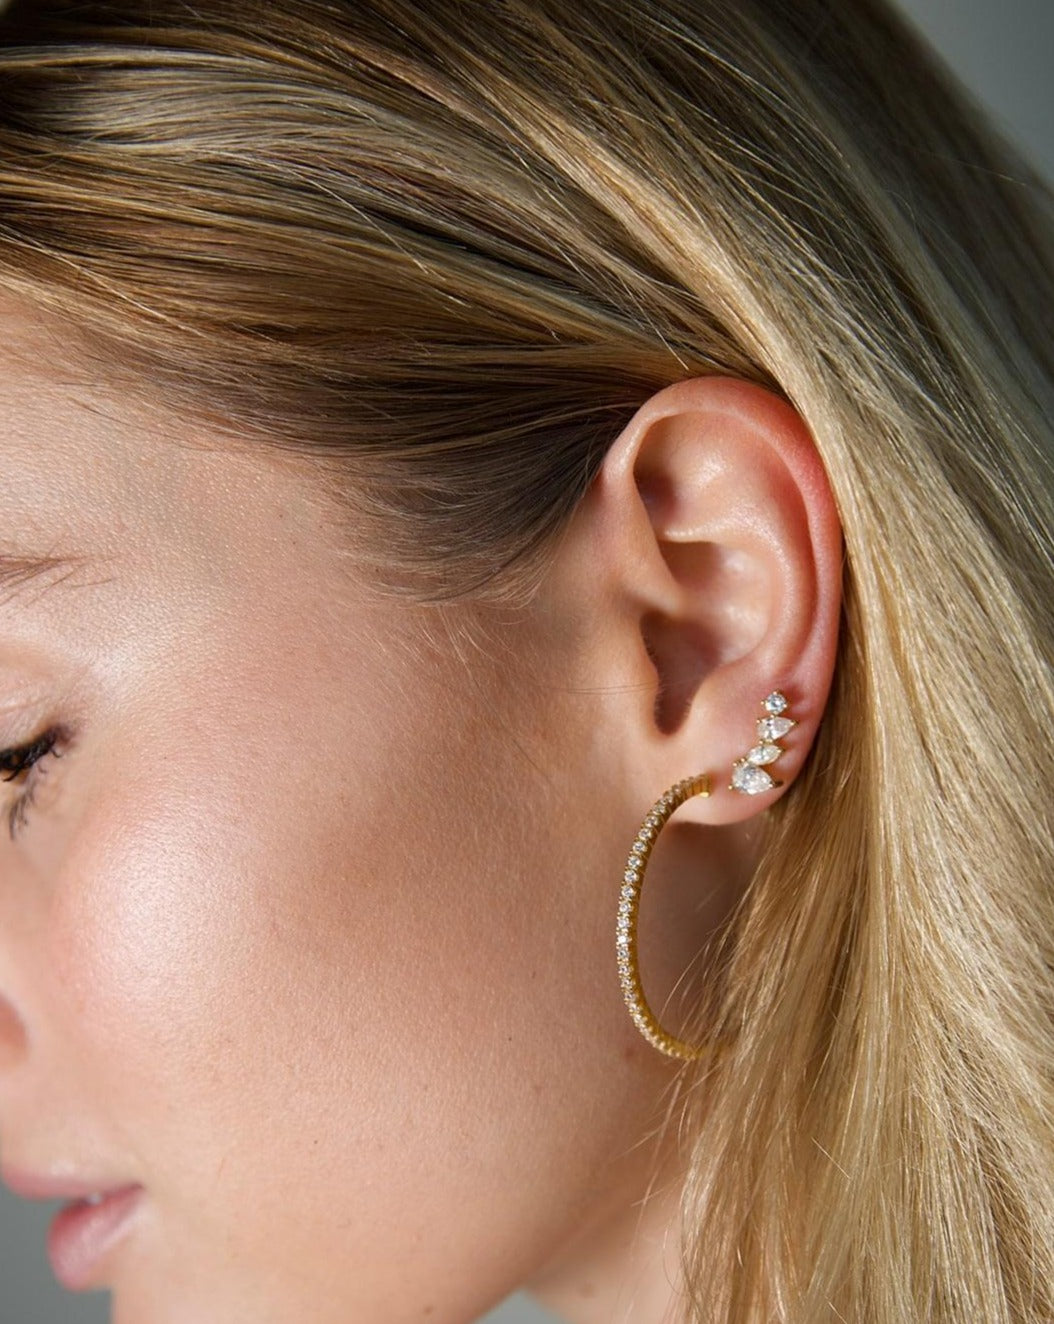 Piercing Illusion earrings 